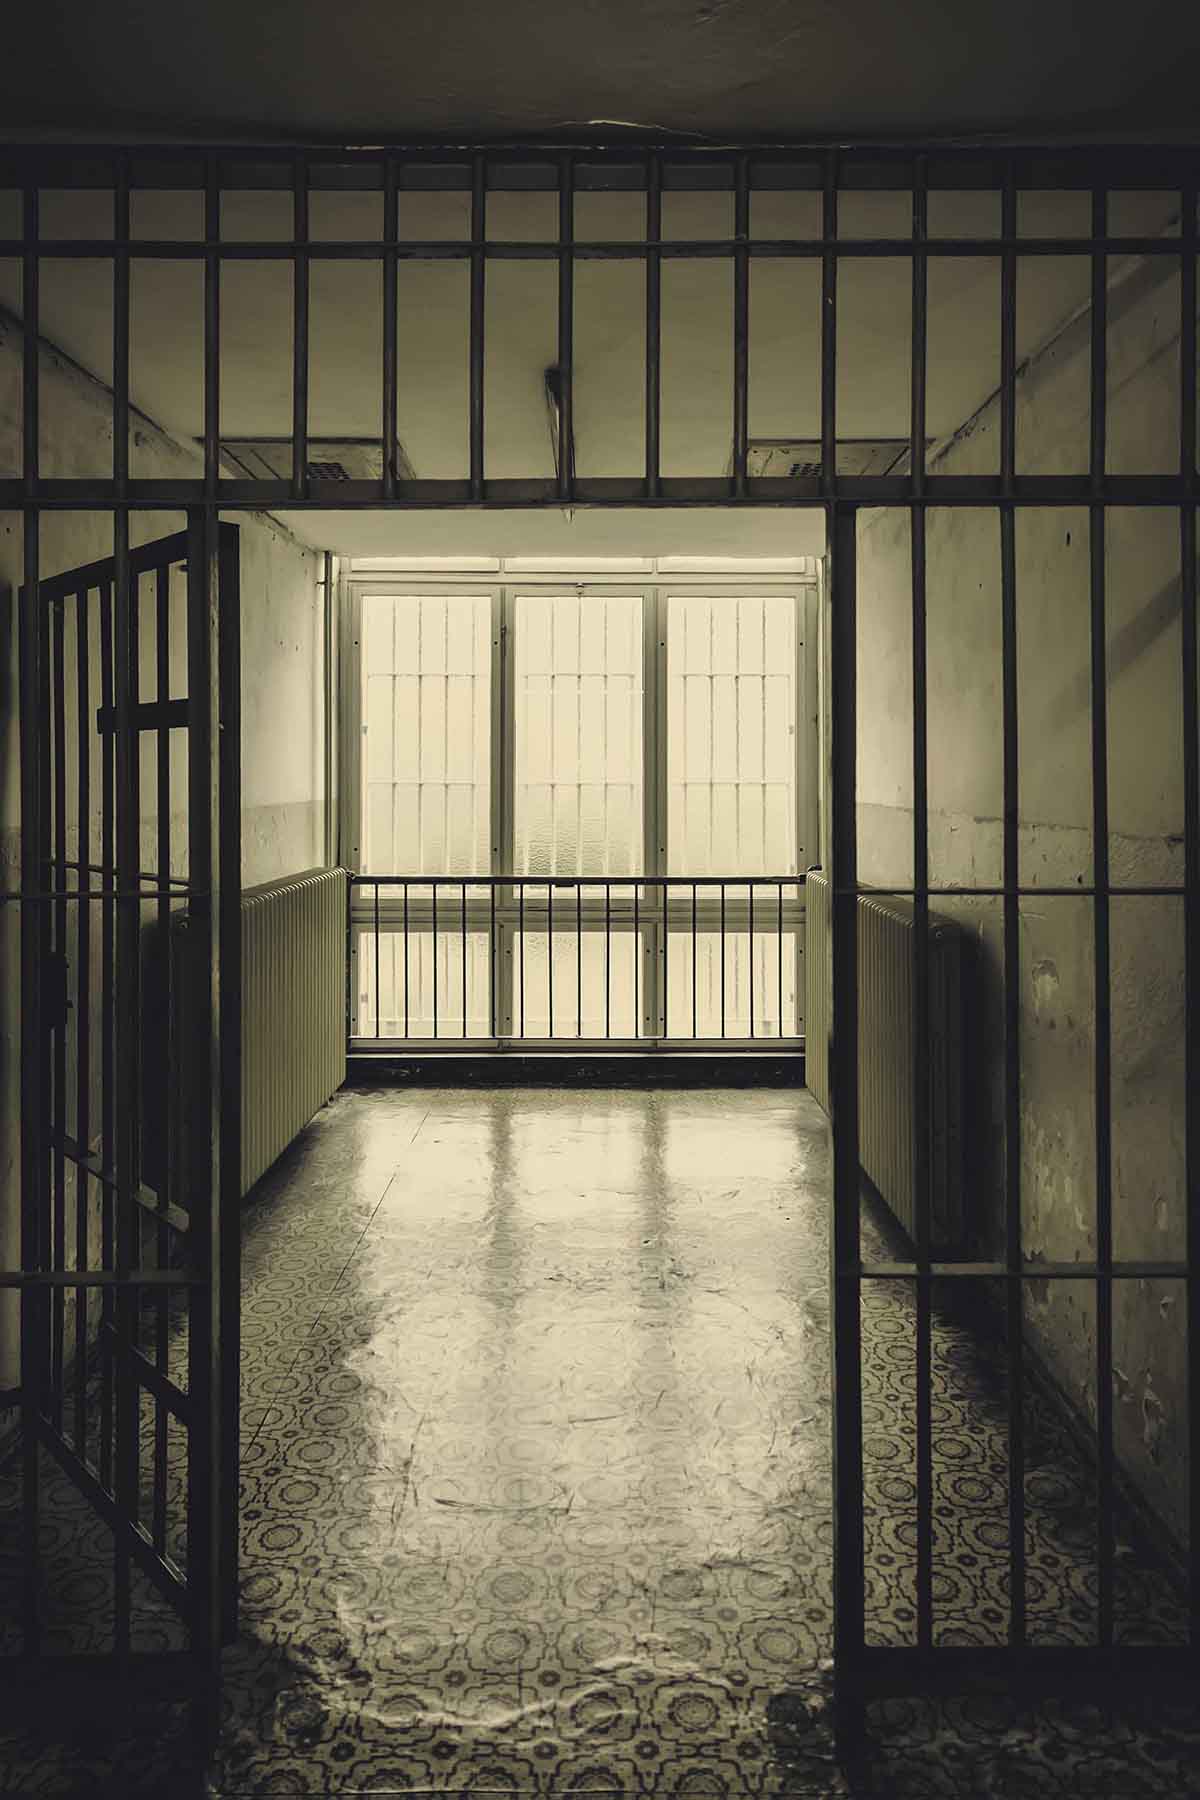 Image shows inside correctional facility